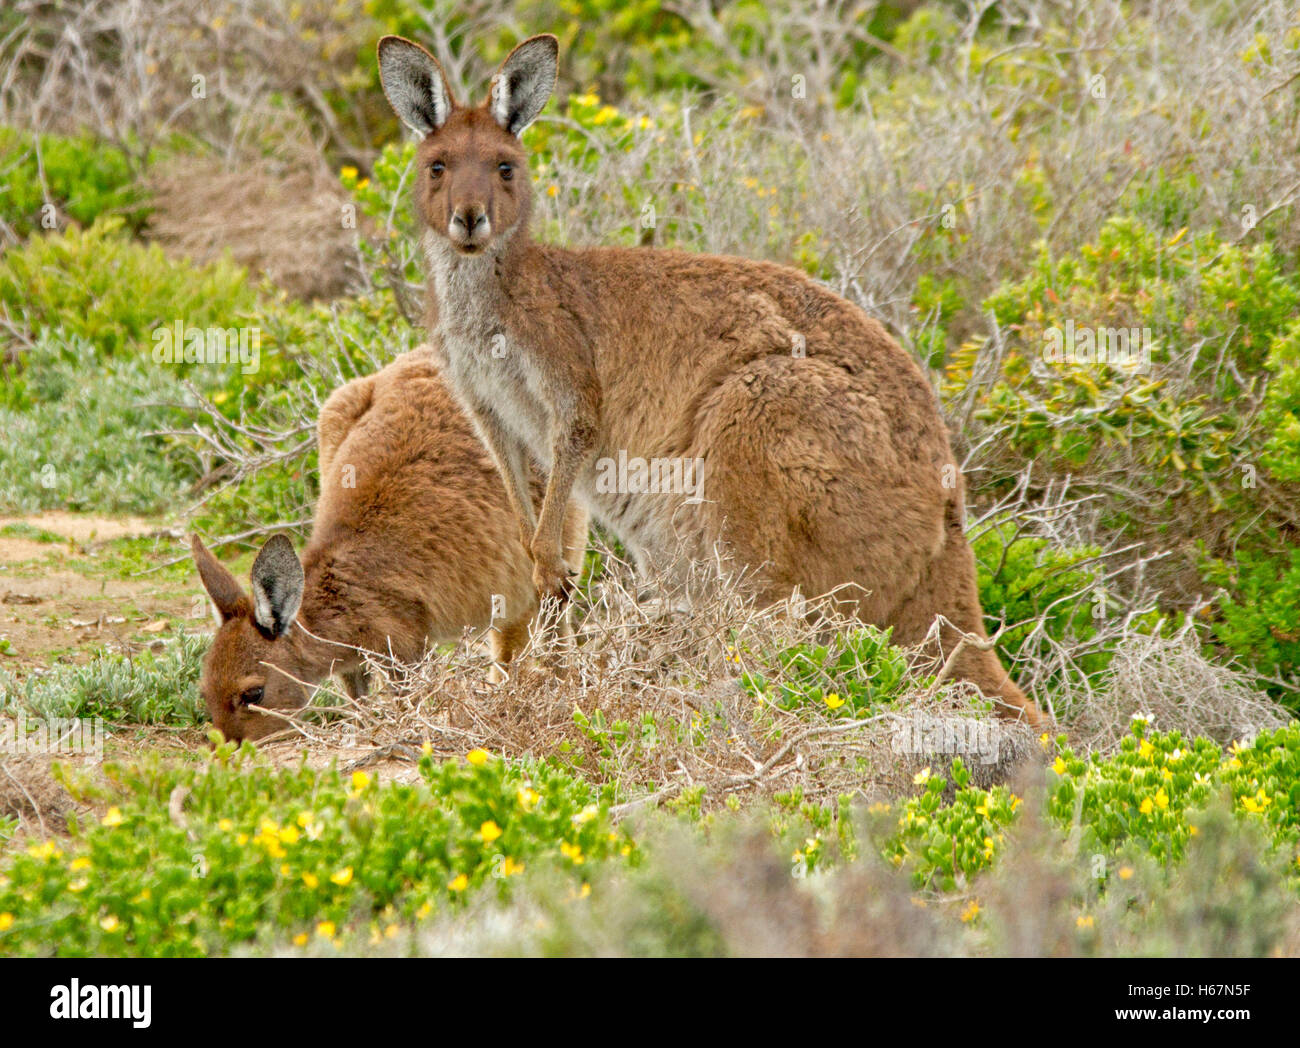 Pair of wild western grey kangaroos Macropus fuliginosus in the wild, male alert & staring at camera, female feeding among emerald green vegetation Stock Photo